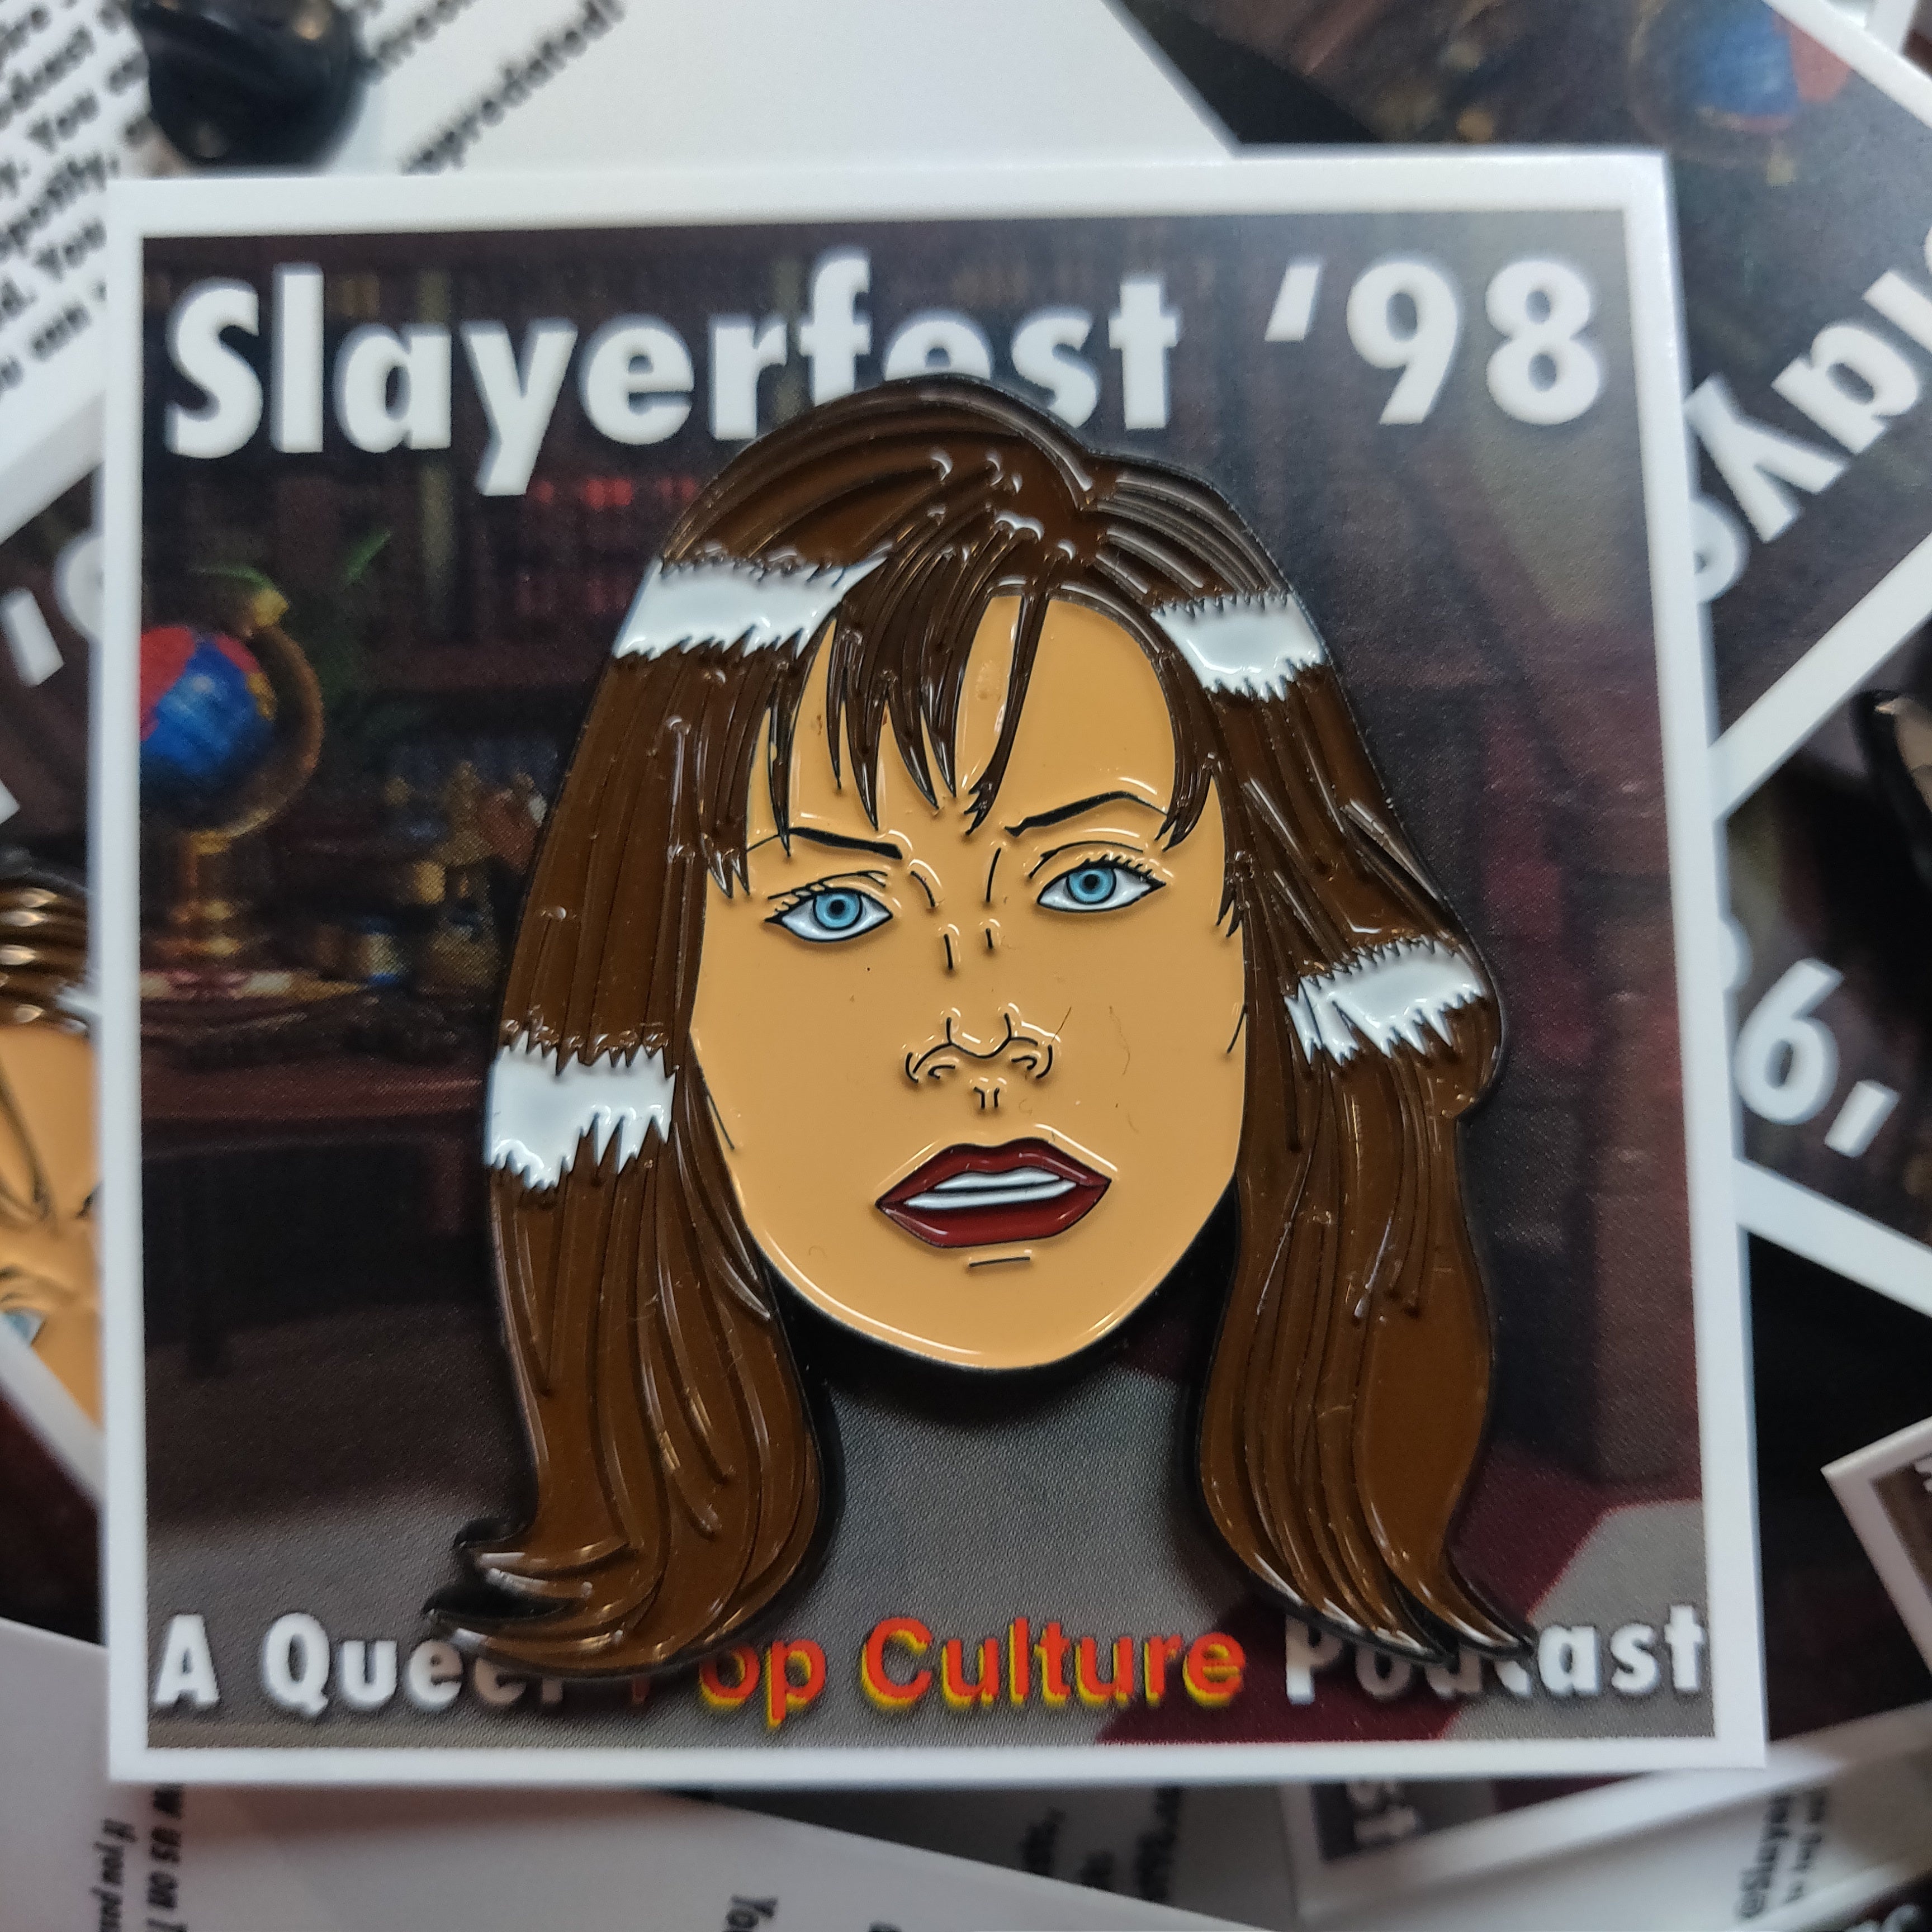 Scream ENAMEL PINS by Slayerfest 98